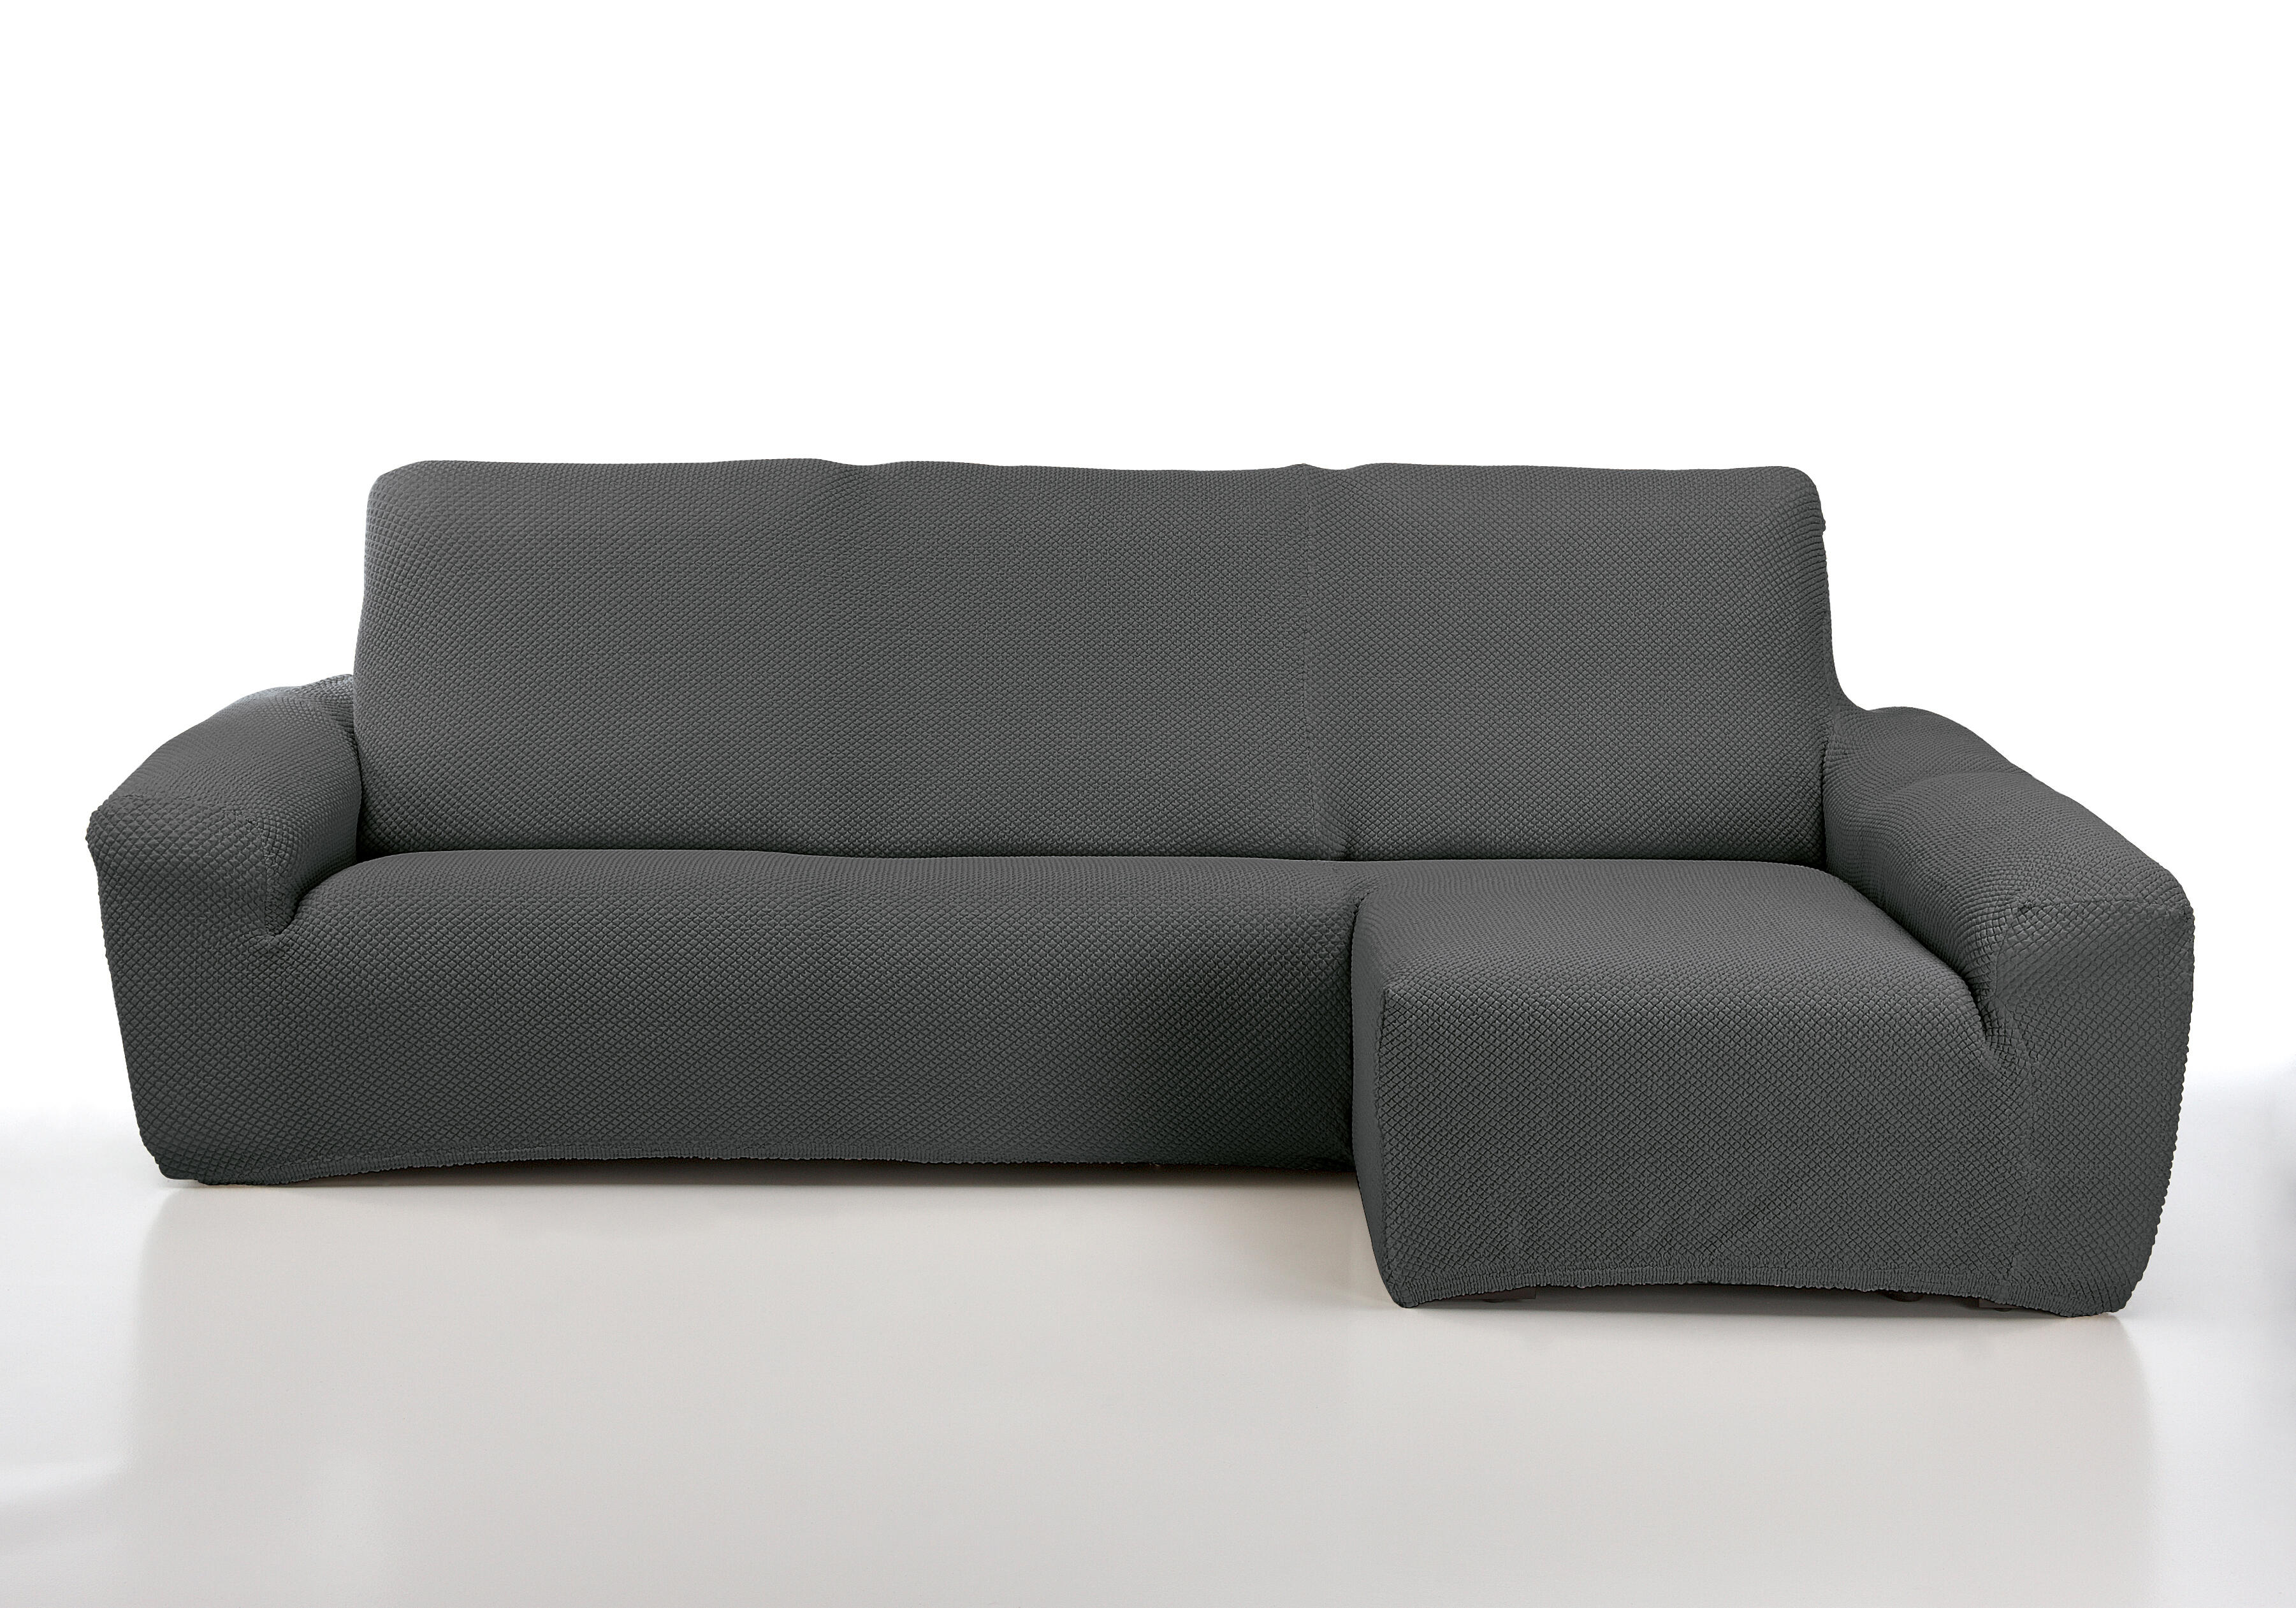 Funda para sofa chaise longue 240 cm brazo derecho - Leire - Color 06 Gris